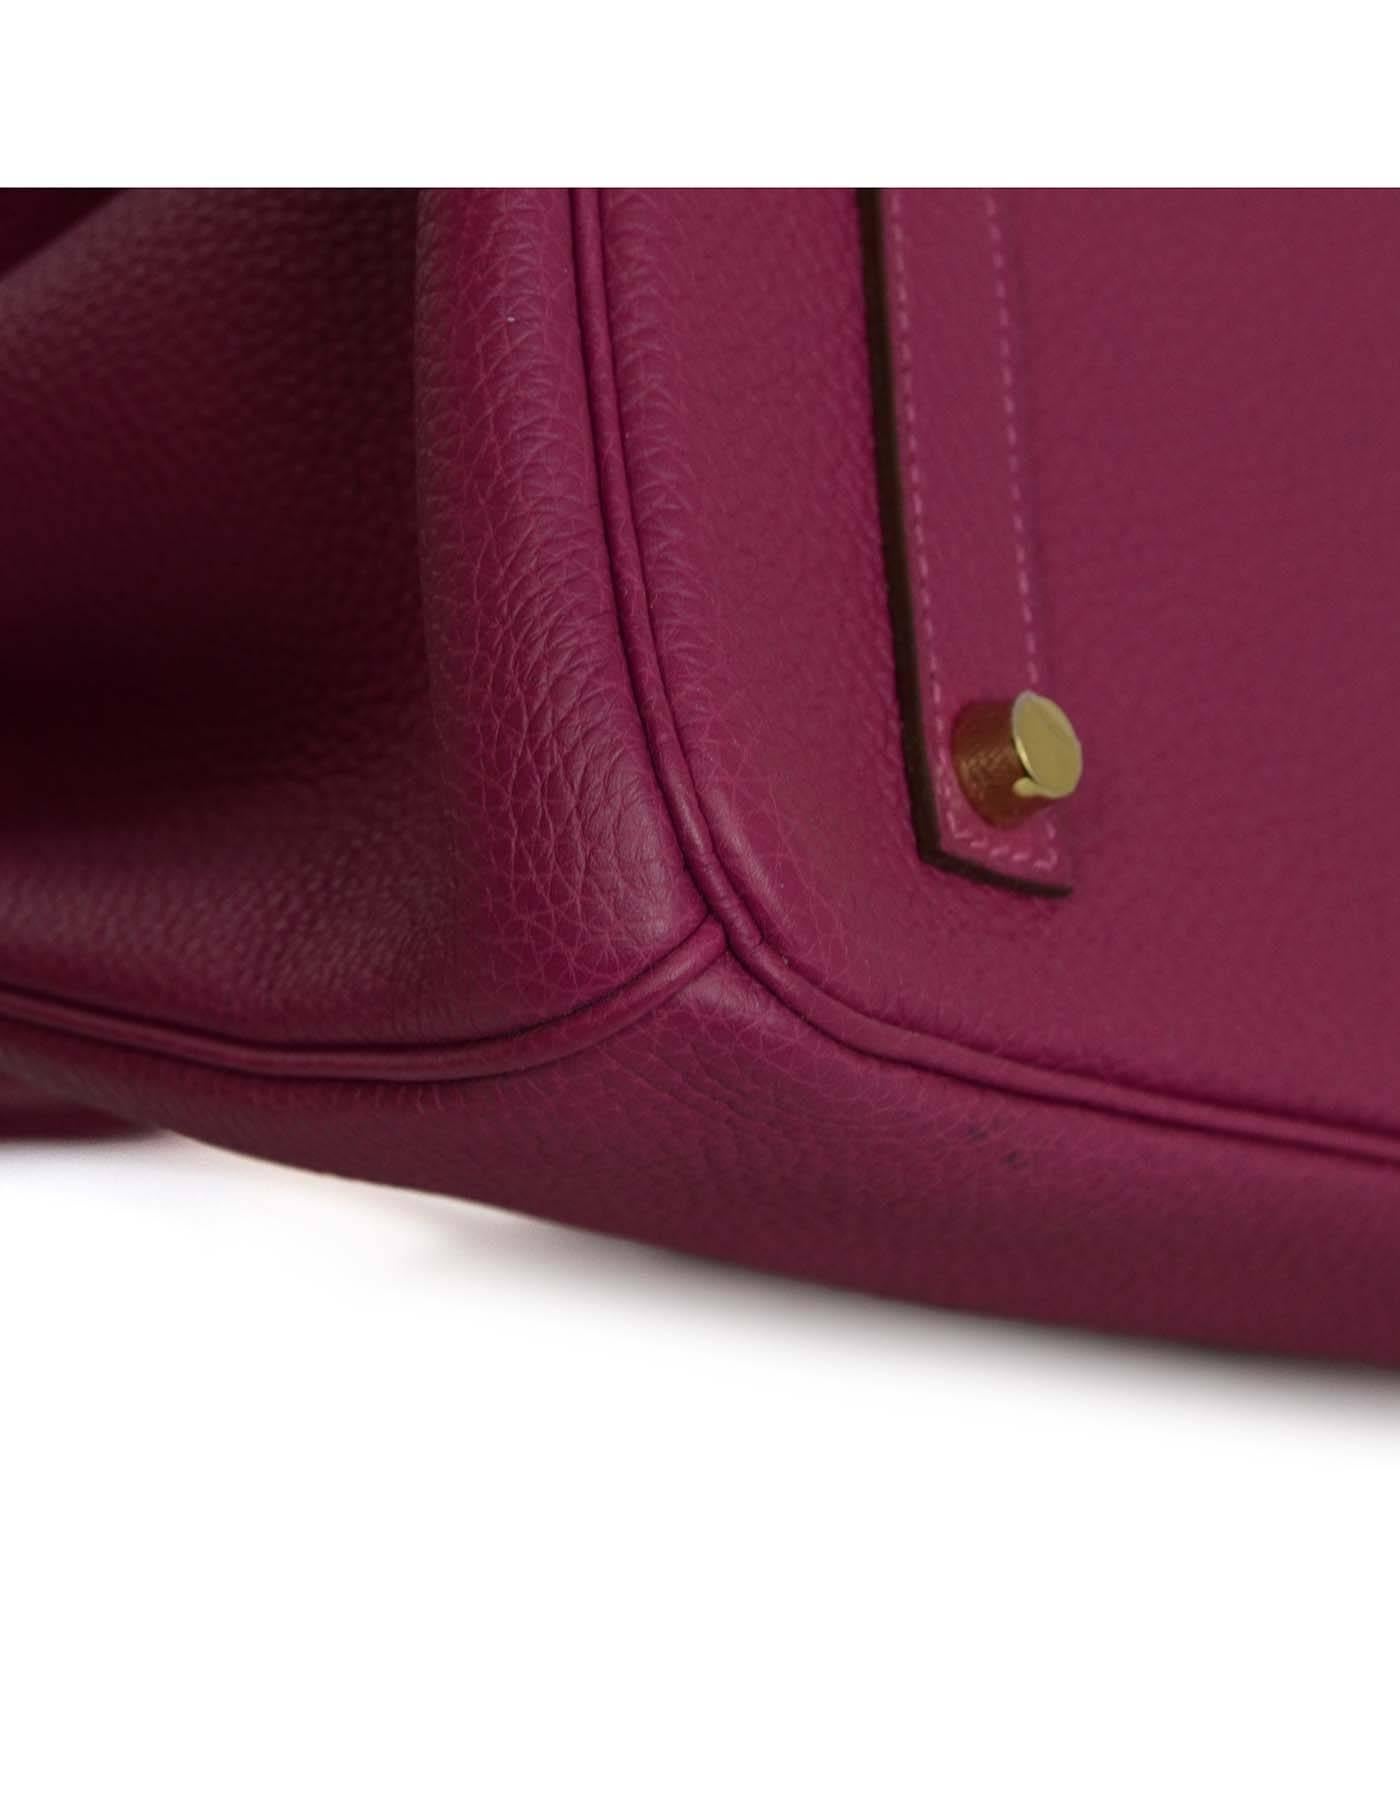 Women's Hermes LIKE NEW Violet Tosca Togo Leather 35cm Birkin Bag w/ Box